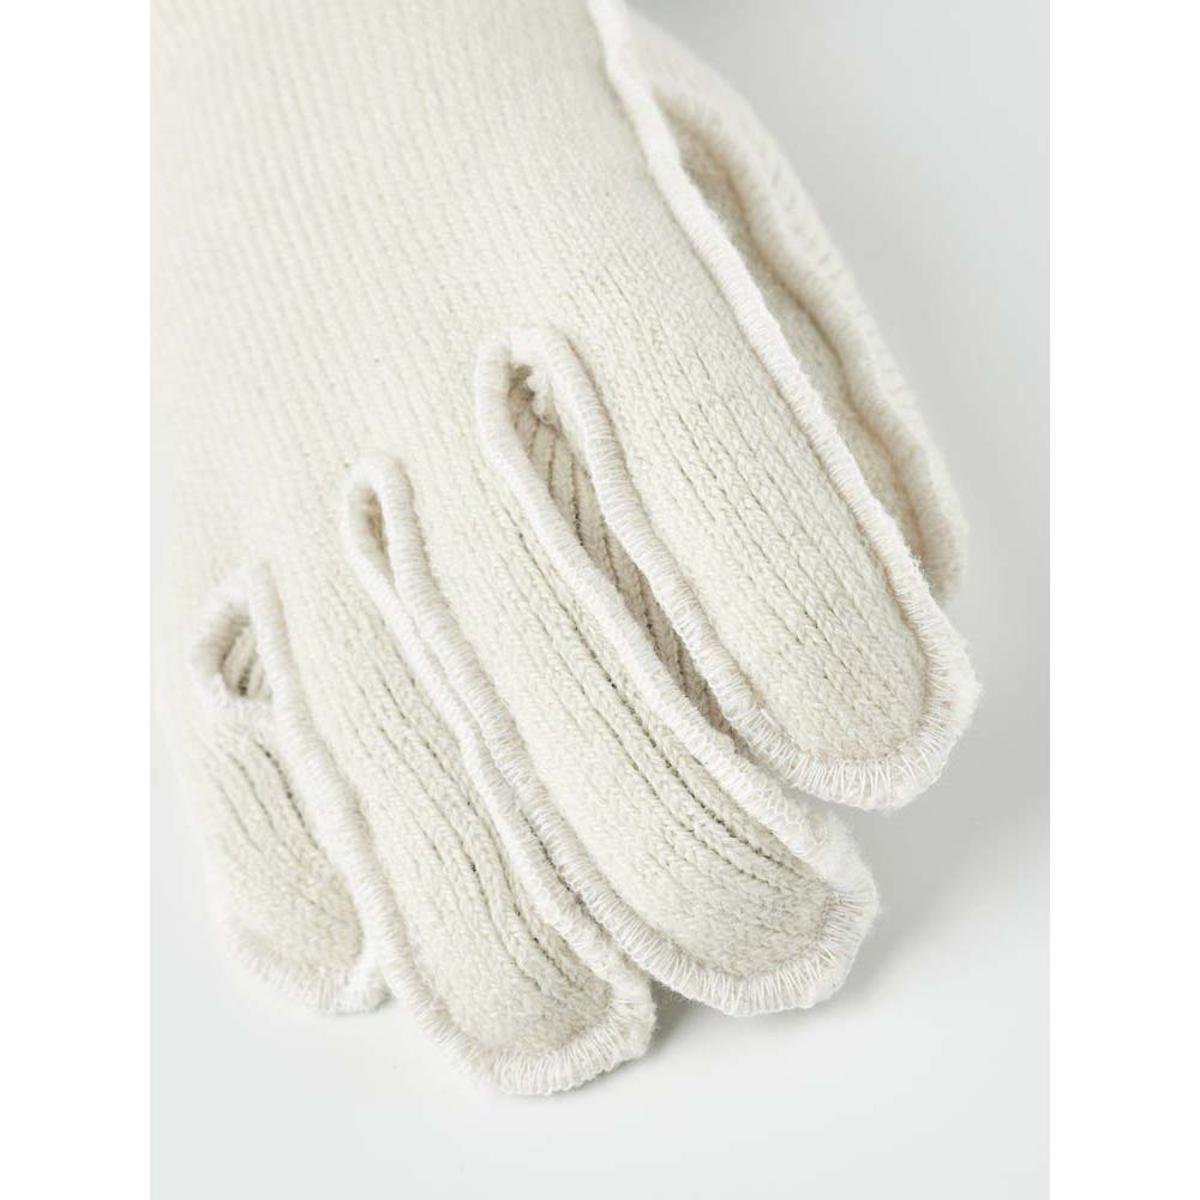 Hestra Wakayama Wool Liner 5-Finger Gloves